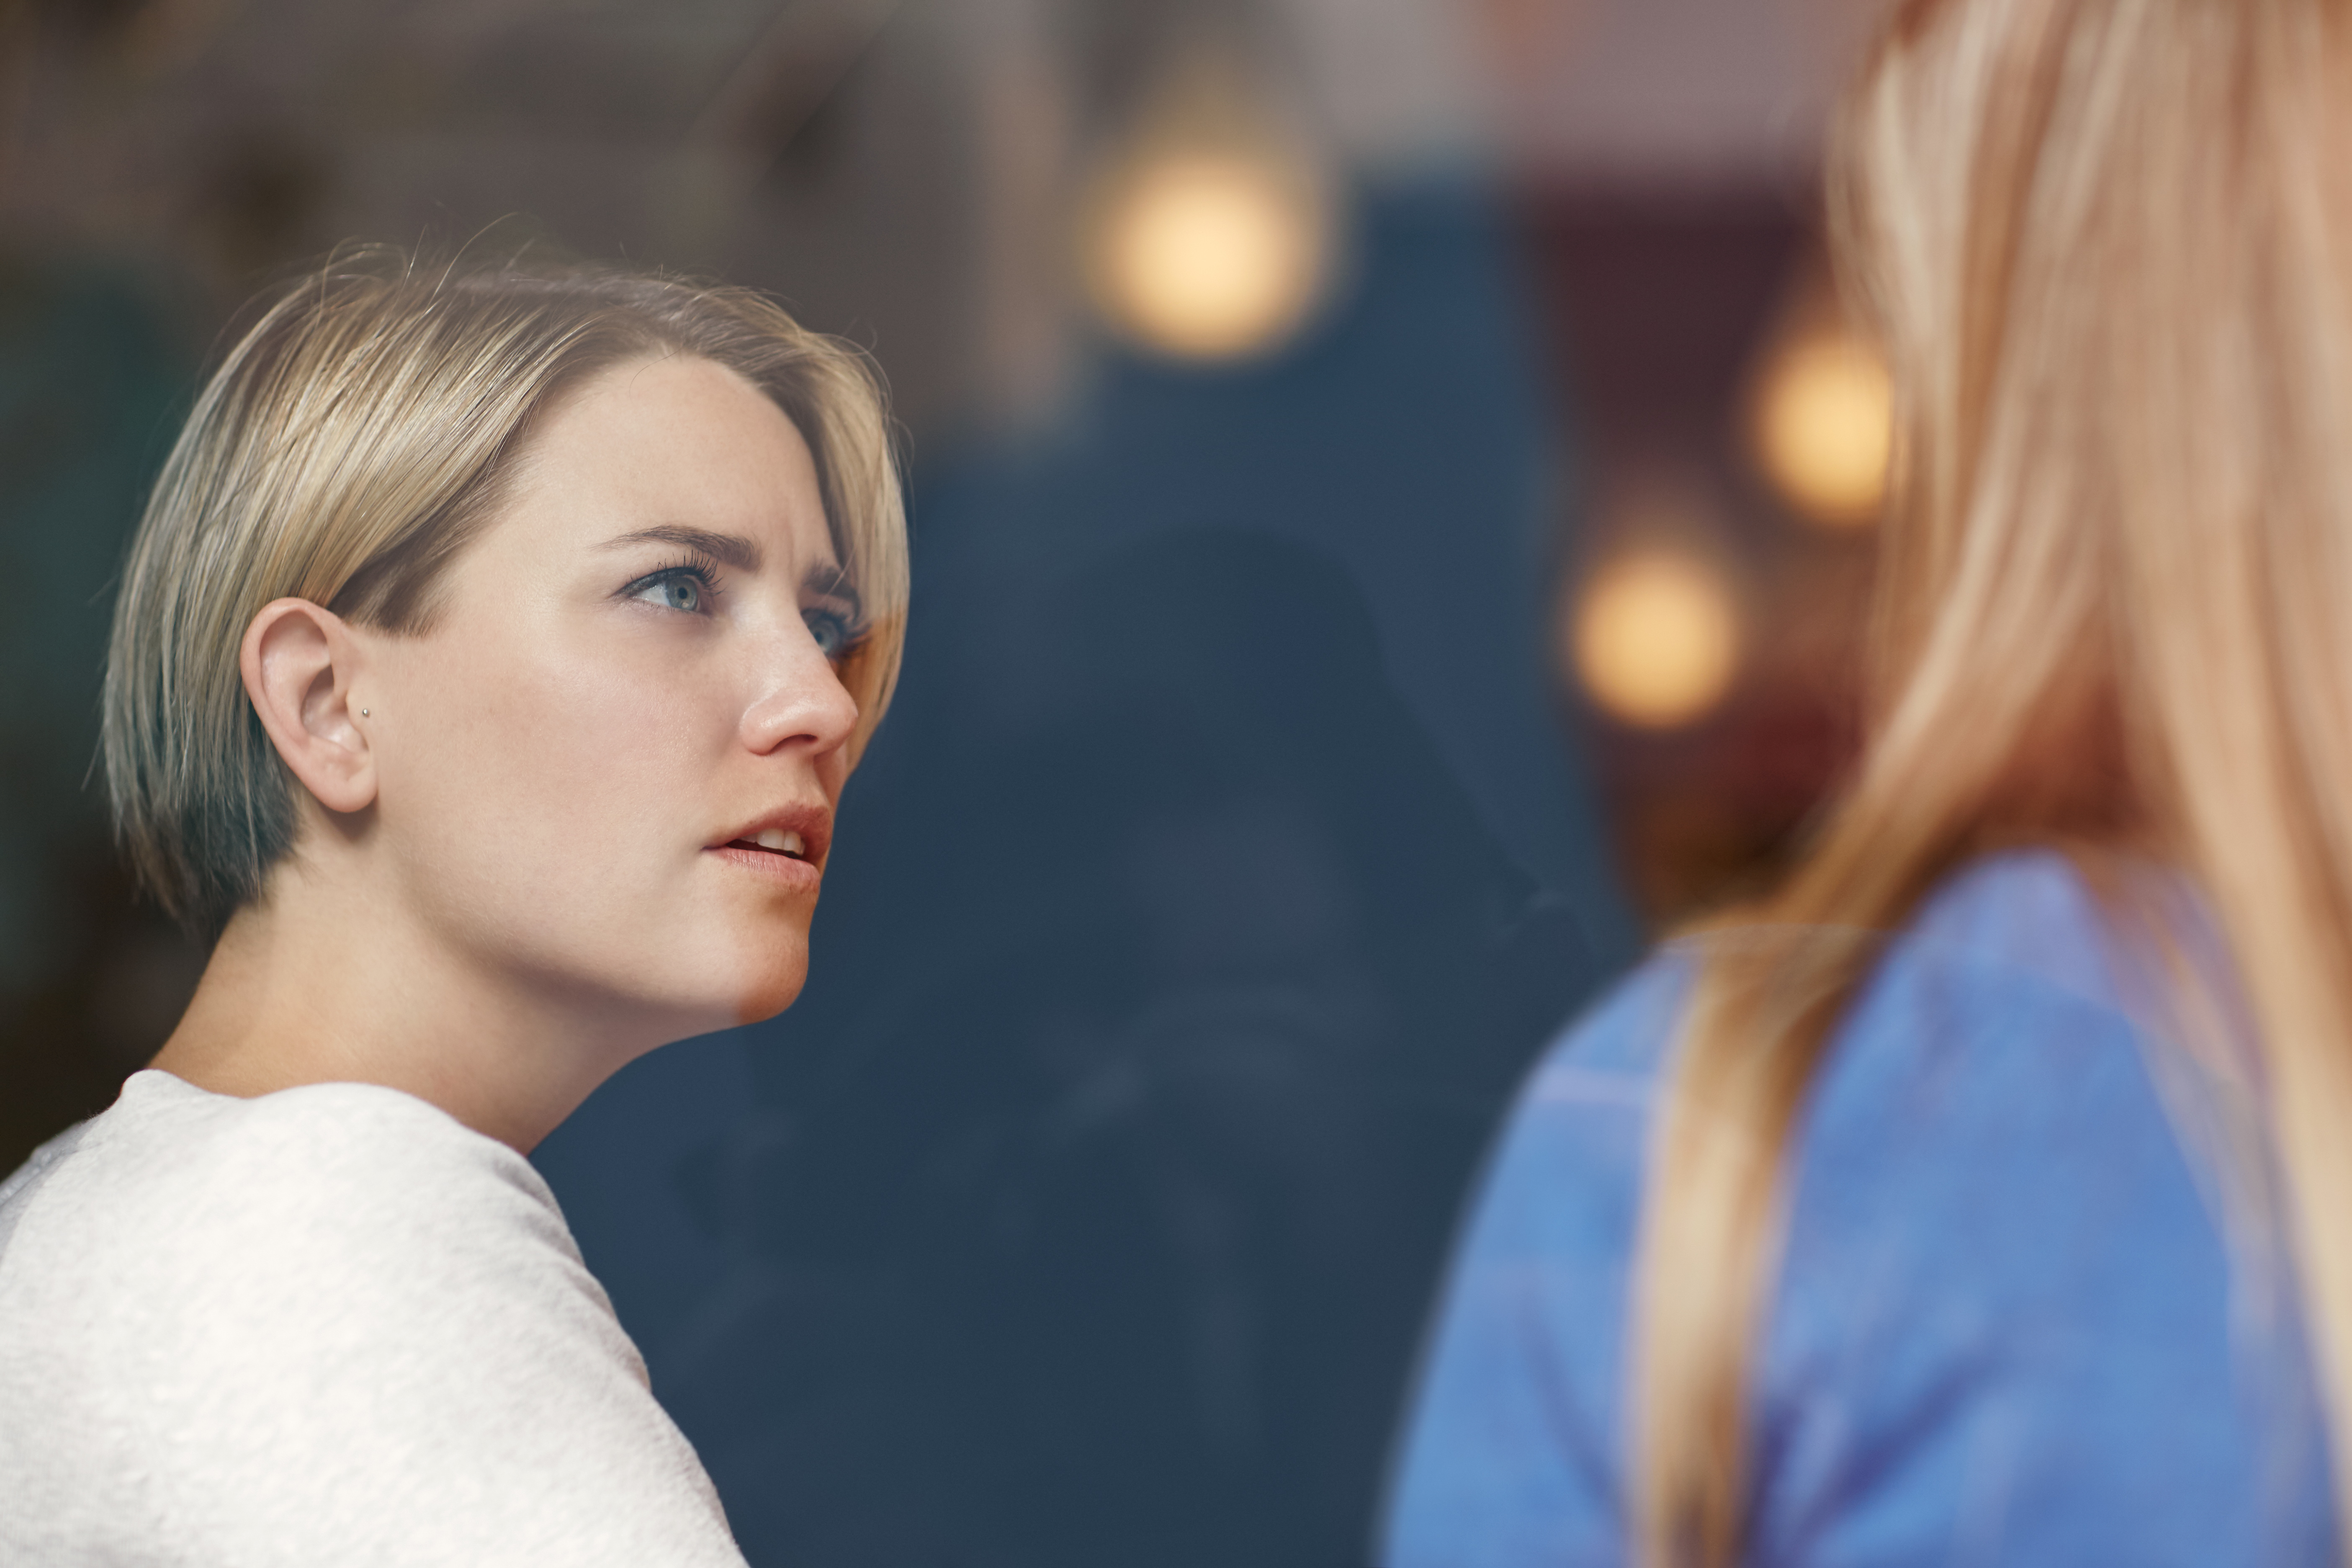 Mujer con cara de asombro mientras escucha a otra mujer | Foto: Shutterstock